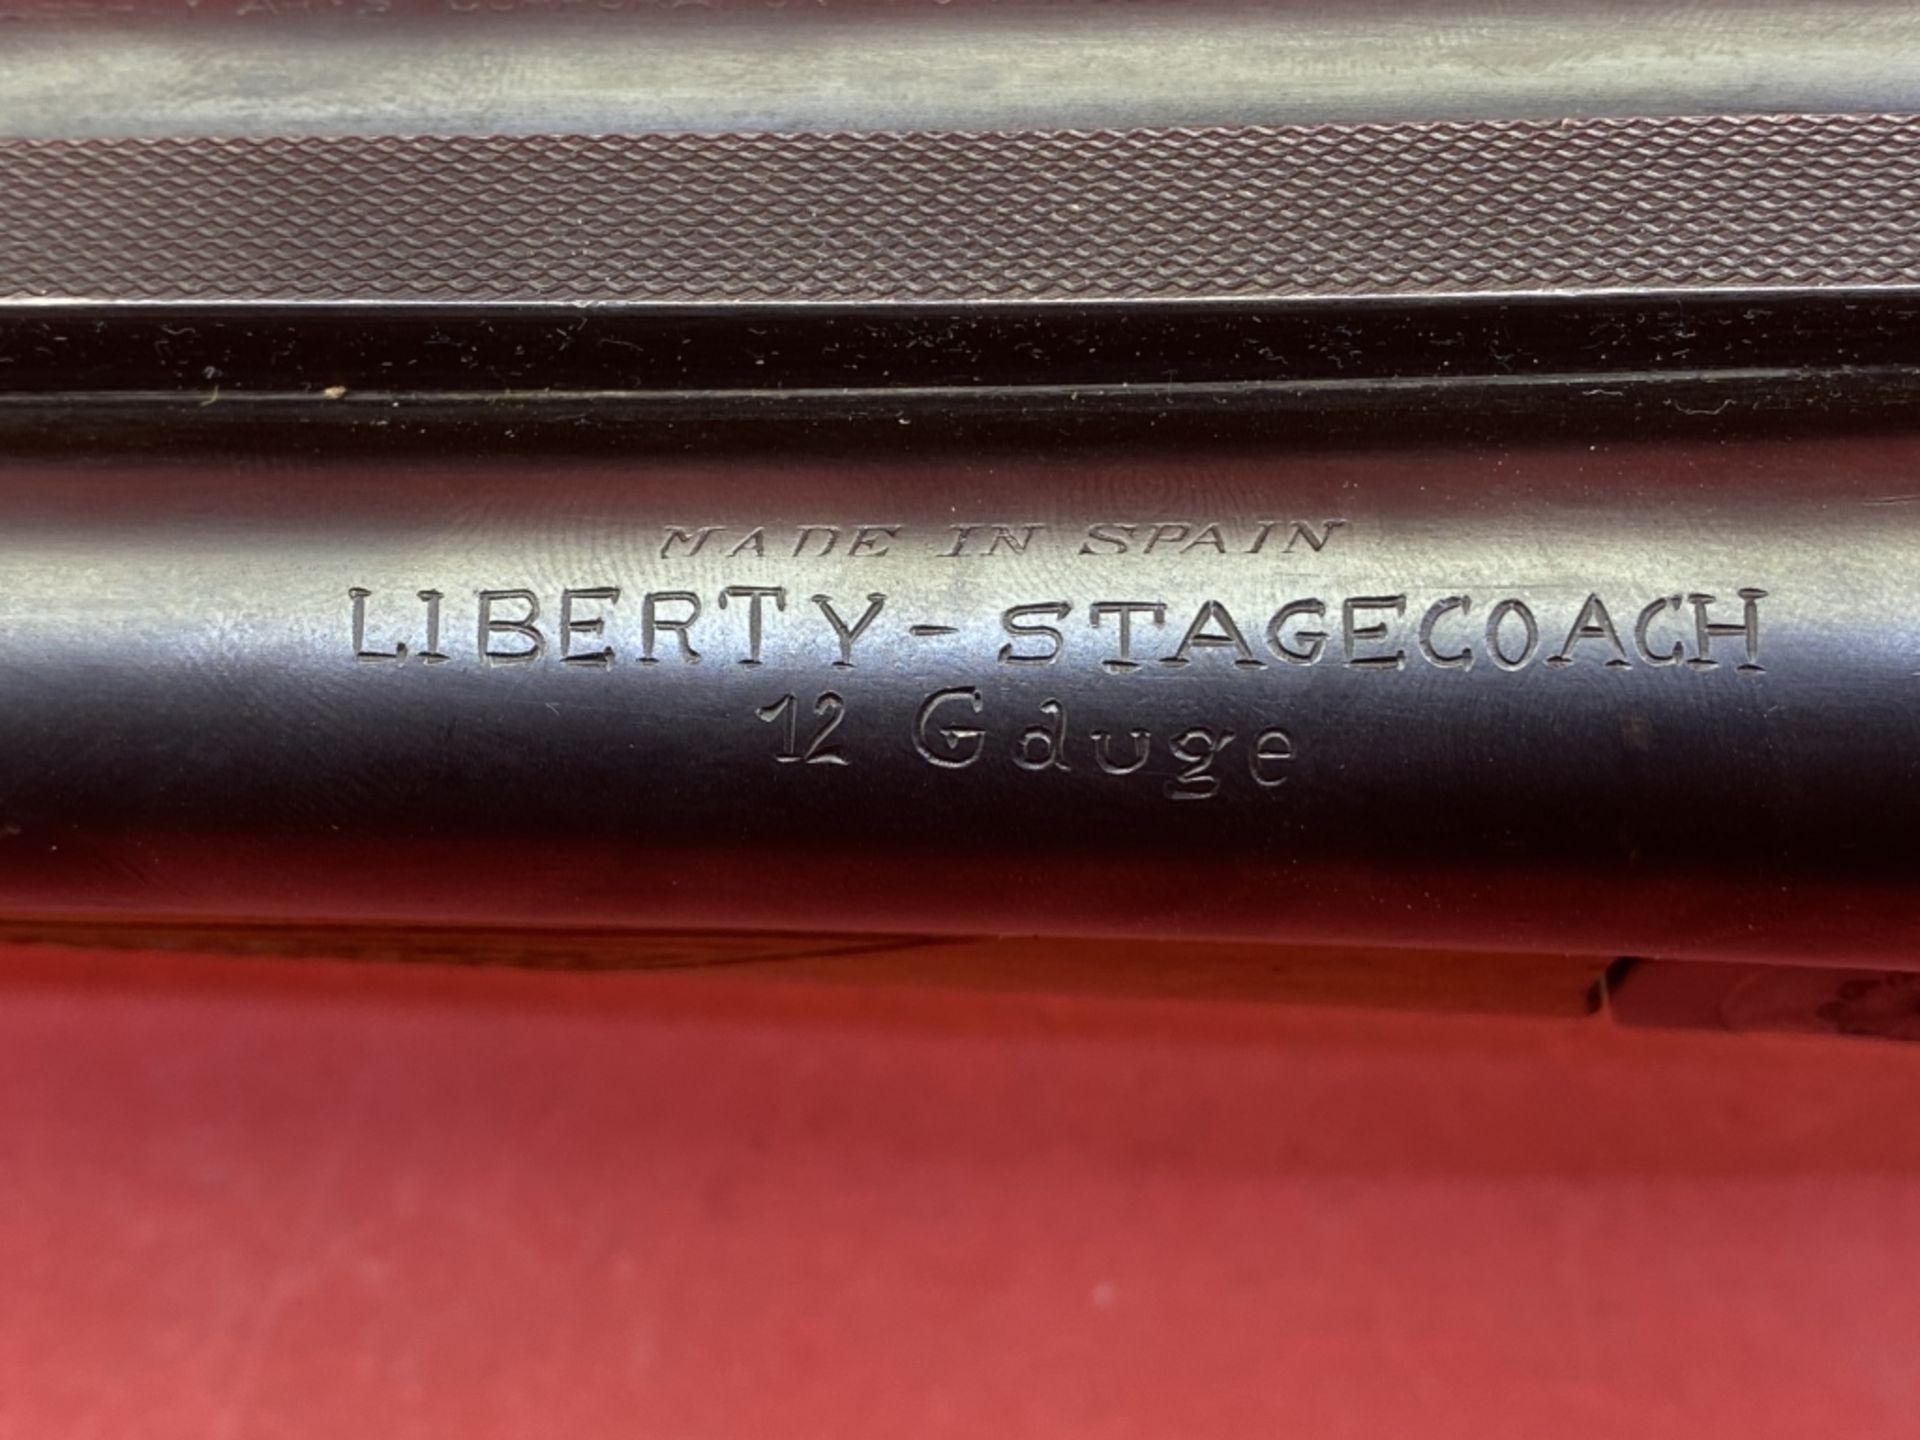 Liberty Arms Stagecoach 12 ga Shotgun - Image 10 of 14